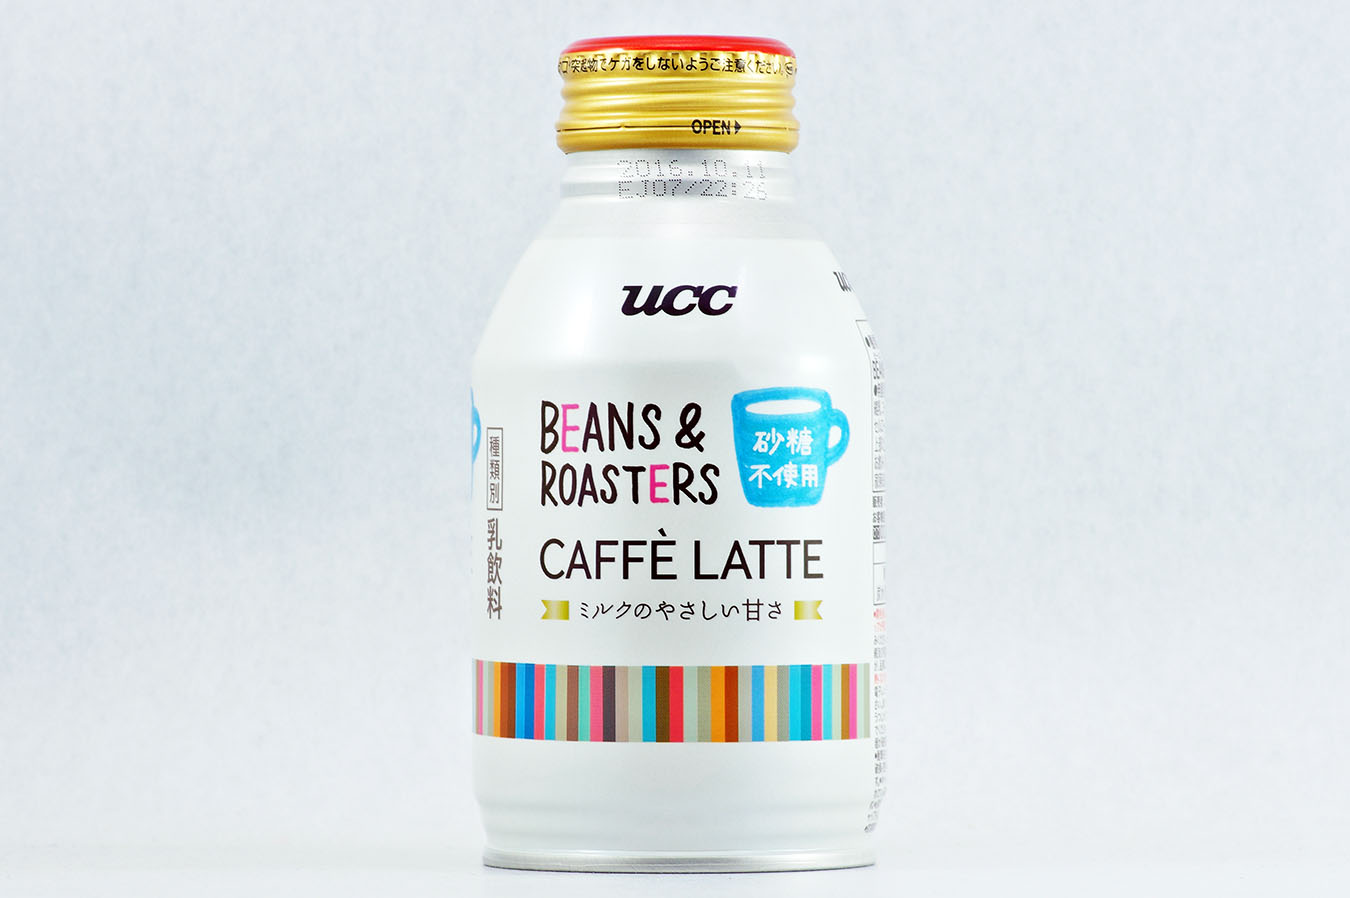 UCC BEANS & ROASTERS CAFFÈ LATTE 砂糖不使用 2015年11月